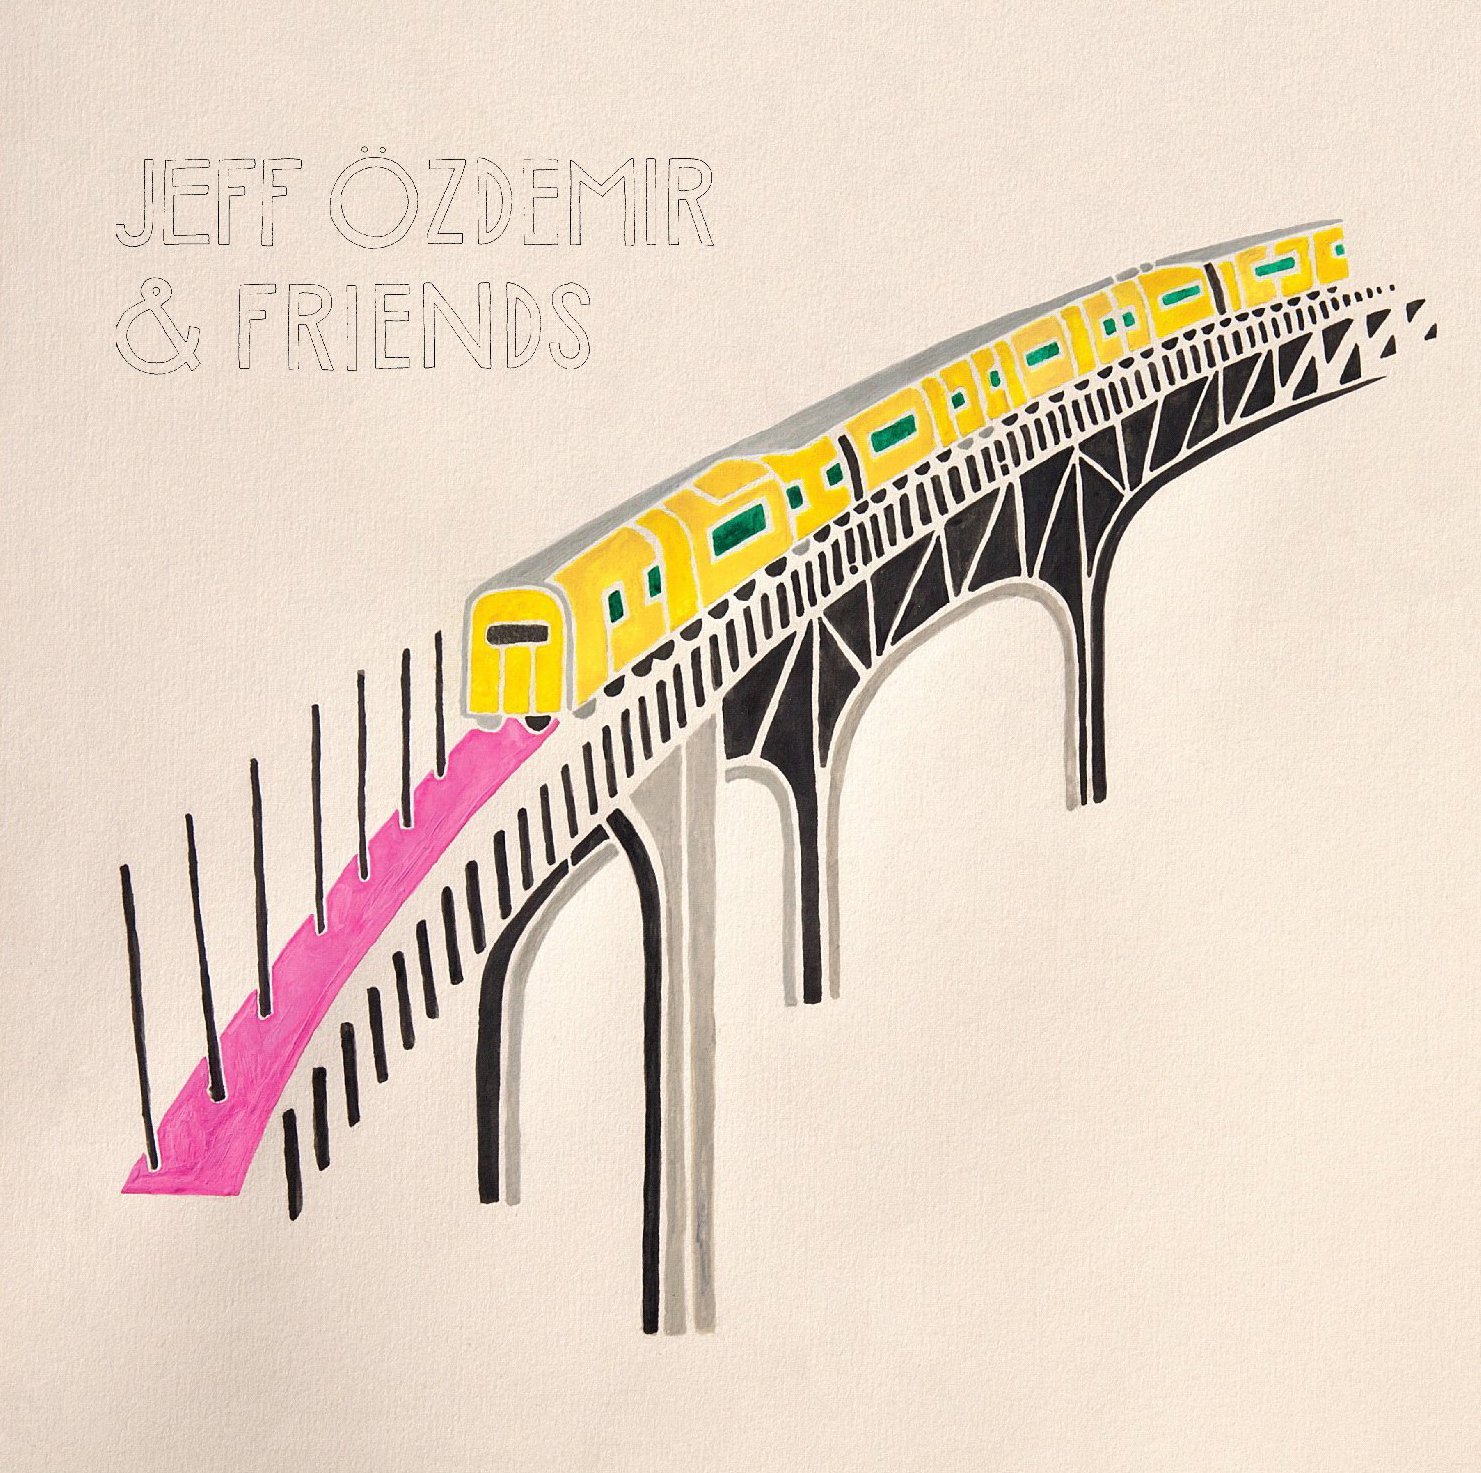 Jeff Özdemir & Friends [Vinyl LP]